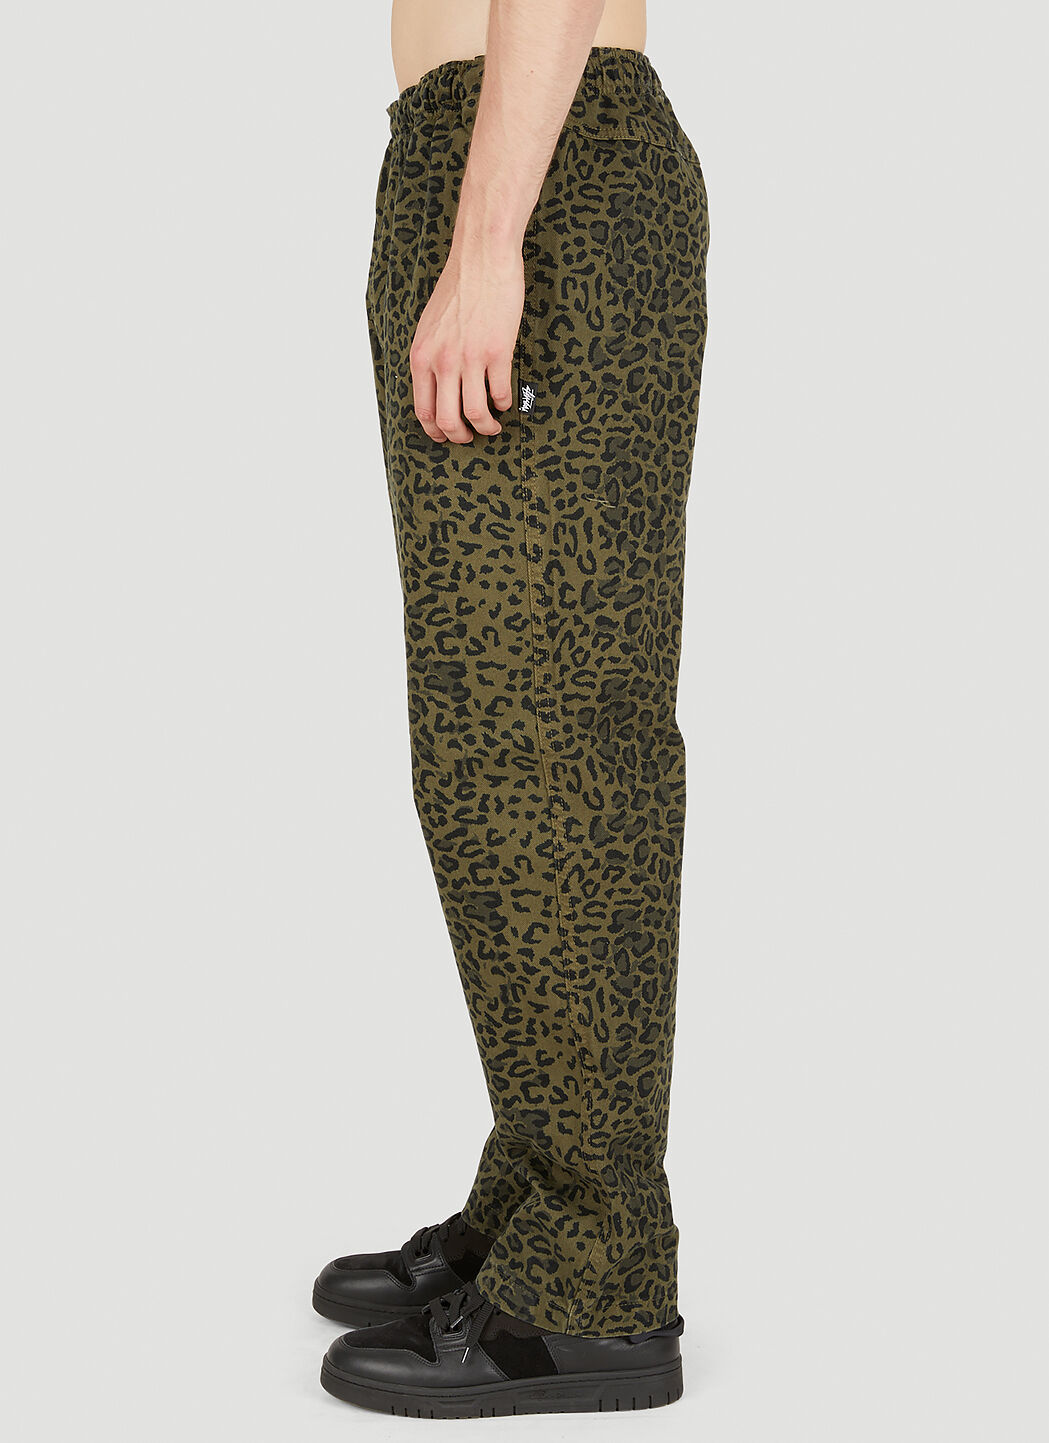 Men's Leopard Print Sequin Harem Pants by Magic & Capes | Festivalia.com